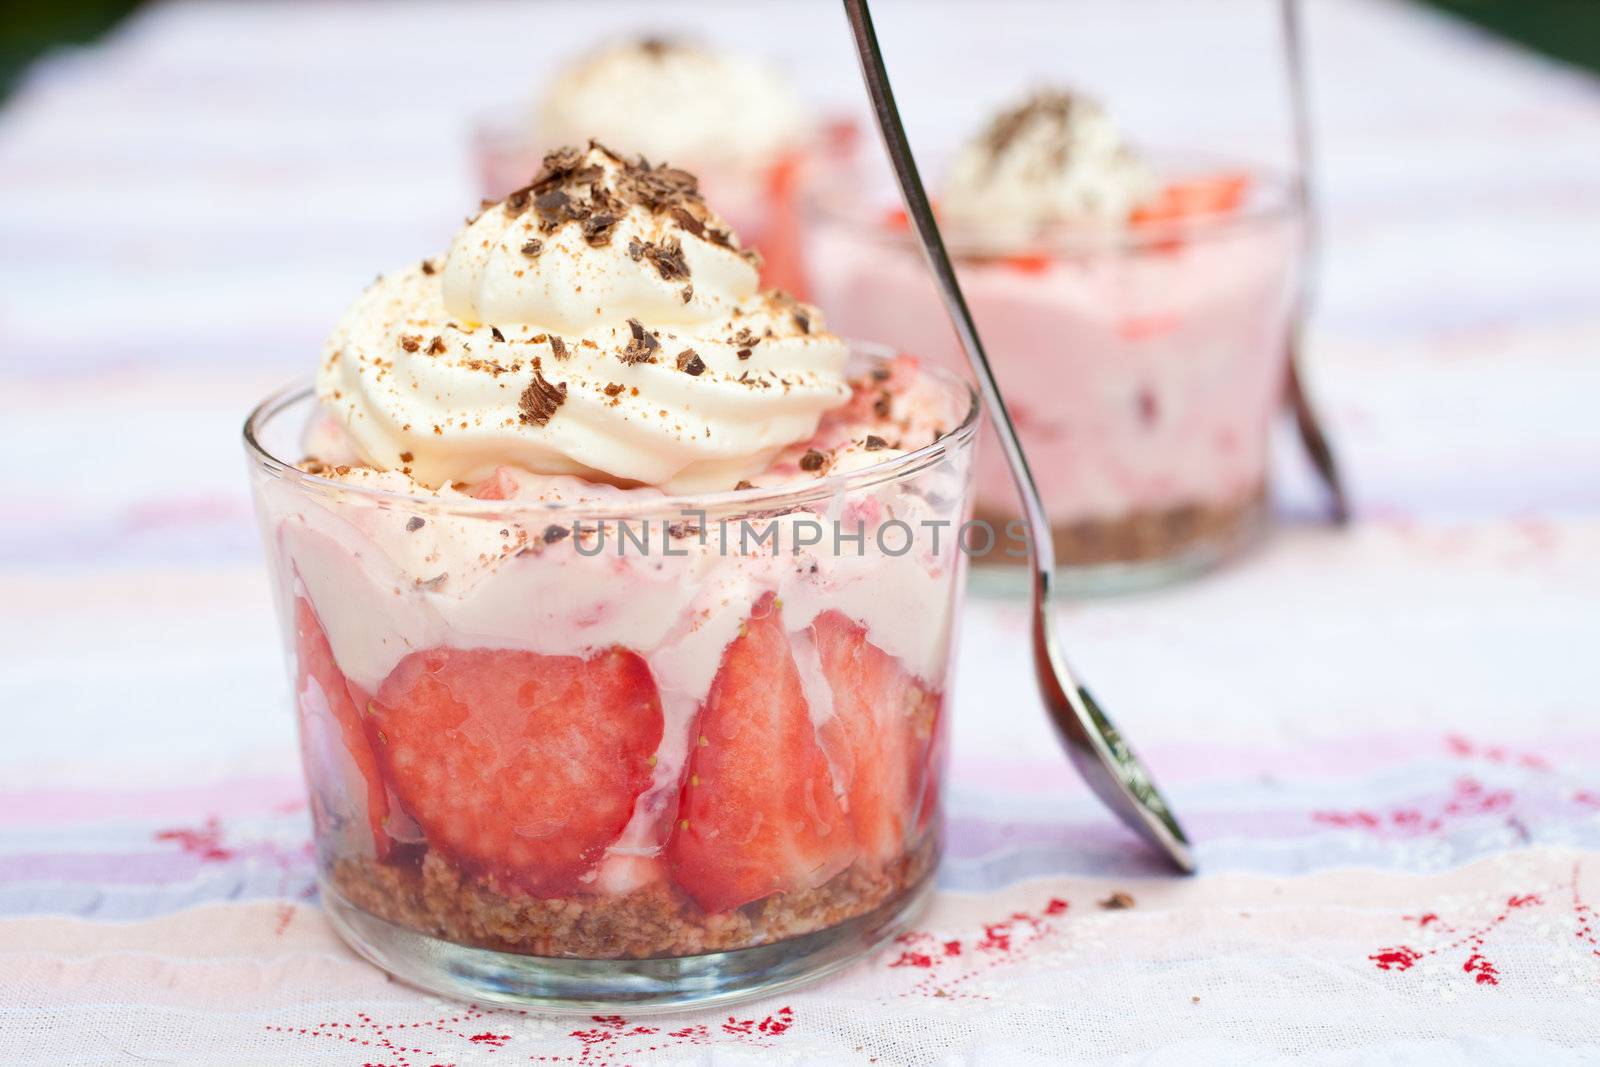 Fresh dessert with strawberries, mascarpone and chocolate bits